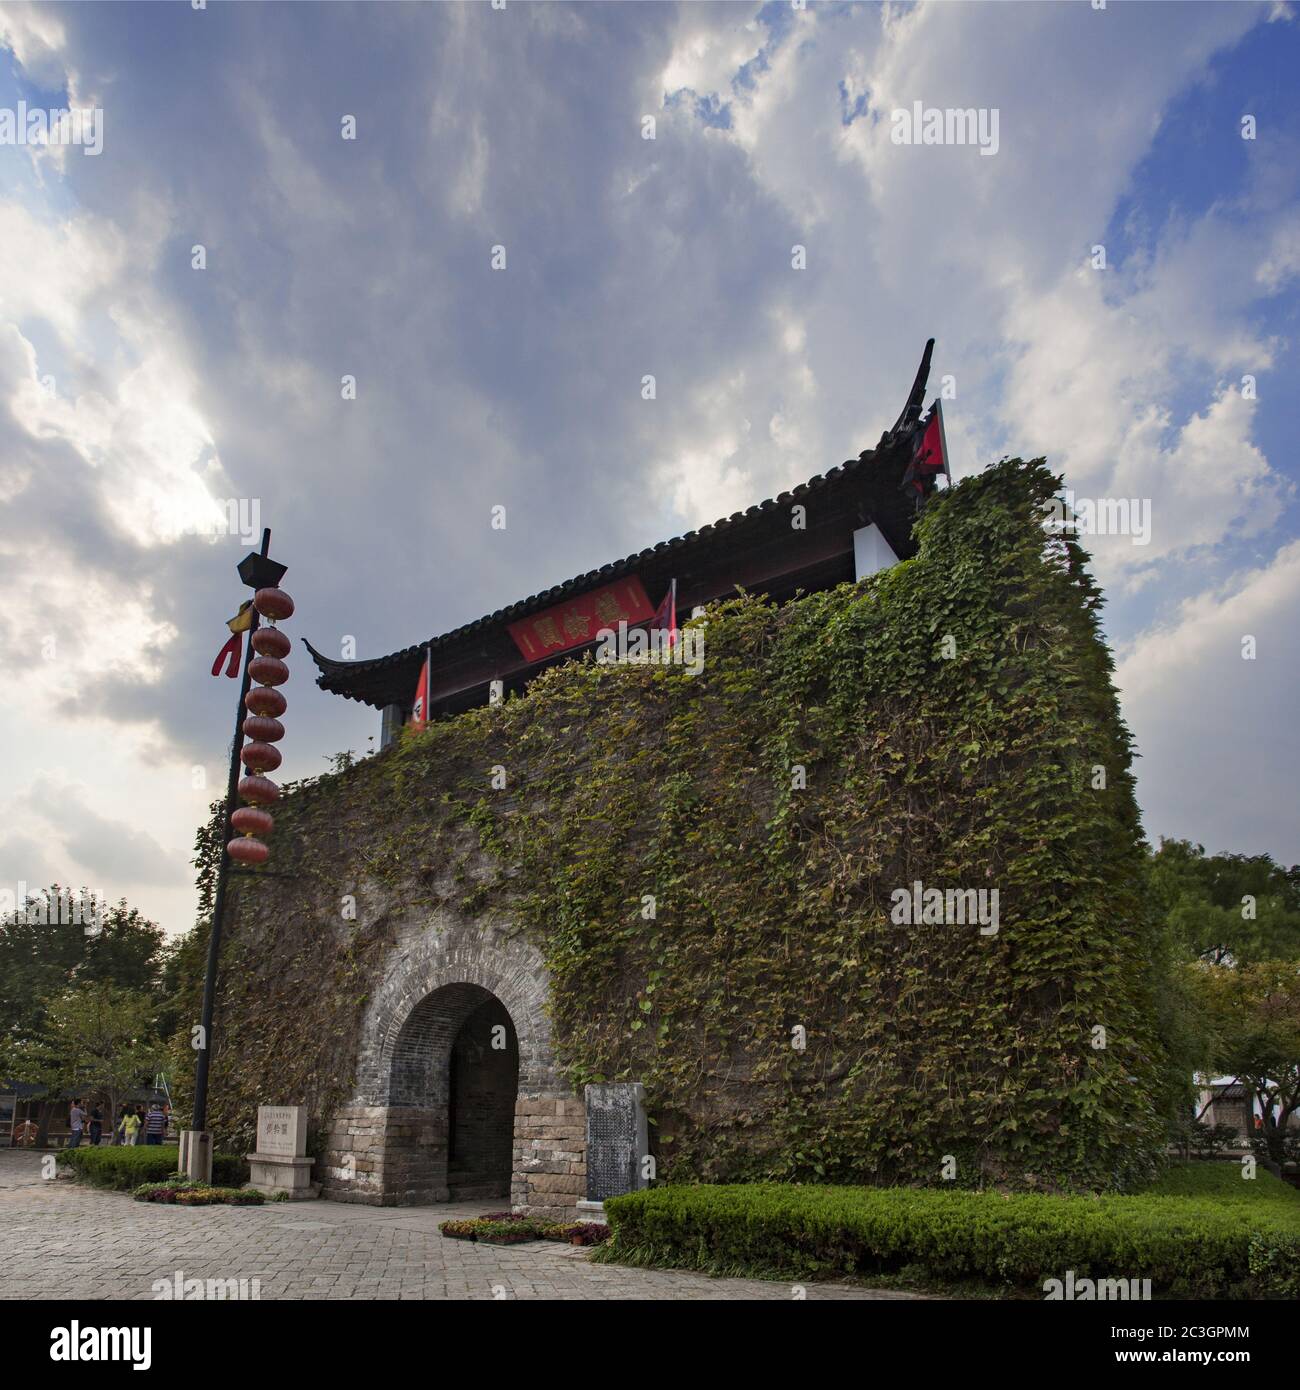 Suzhou Gold Chang région dans la province de jiangsu fengqiao pittoresque endroit Banque D'Images